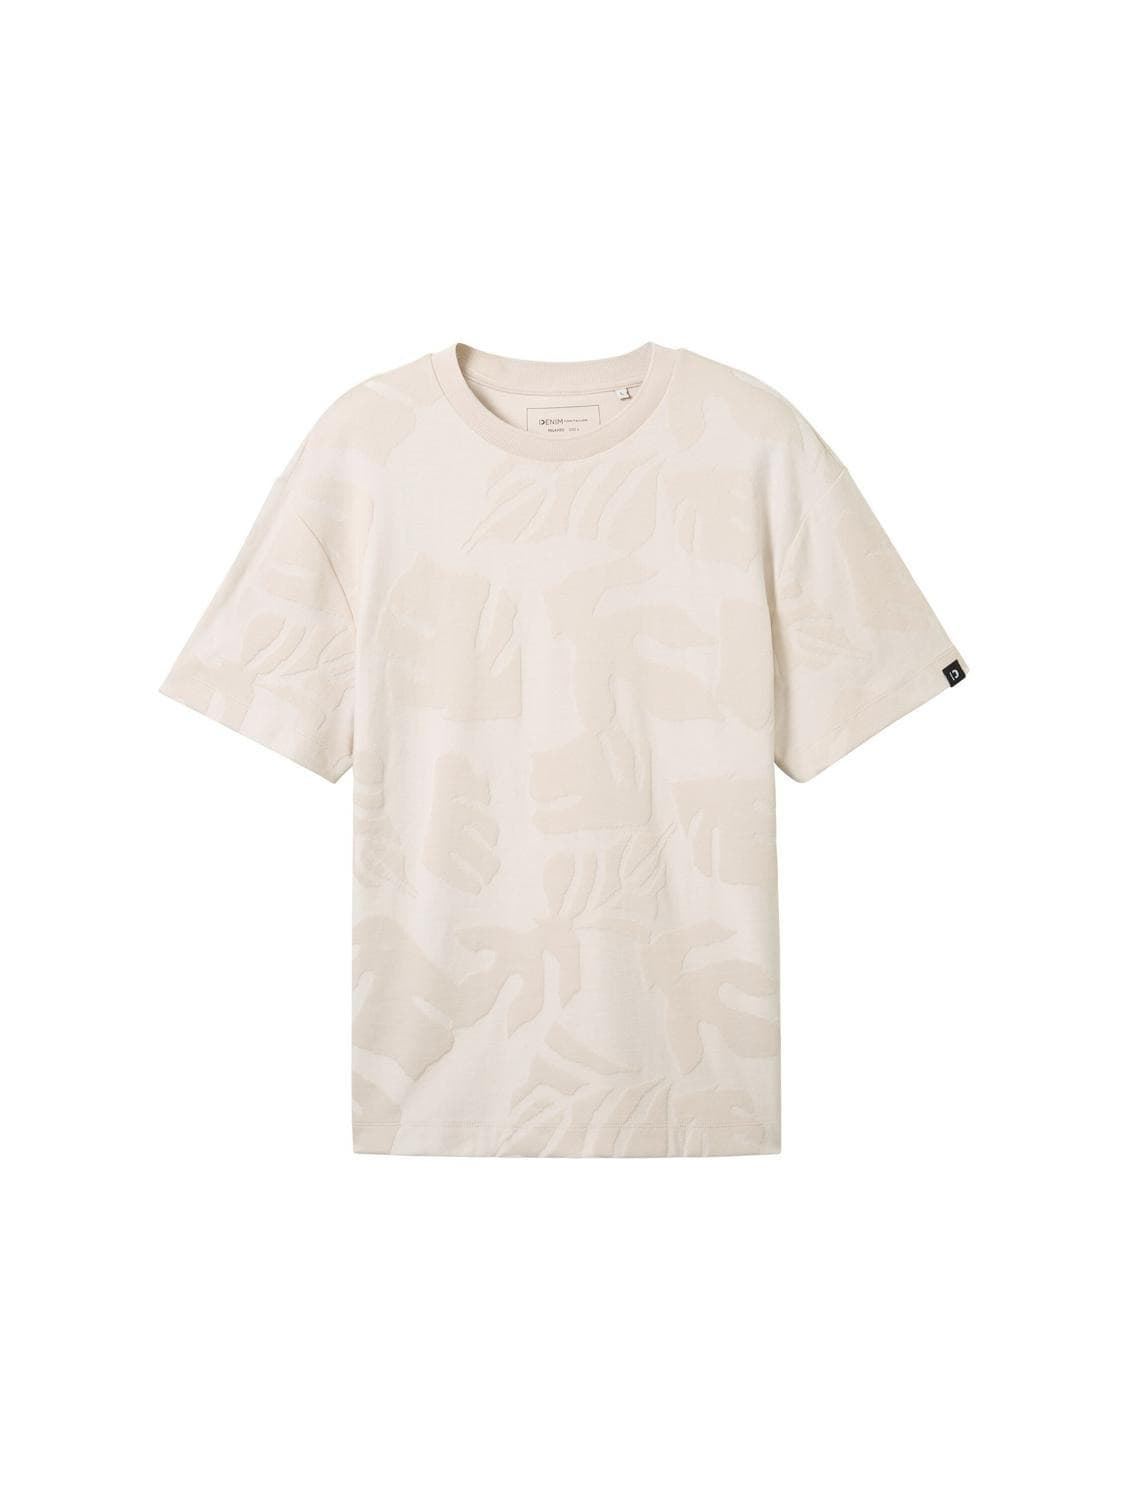 Camiseta Tom Tailor 1040870 35003 beige leaves jacquard - Imagen 1